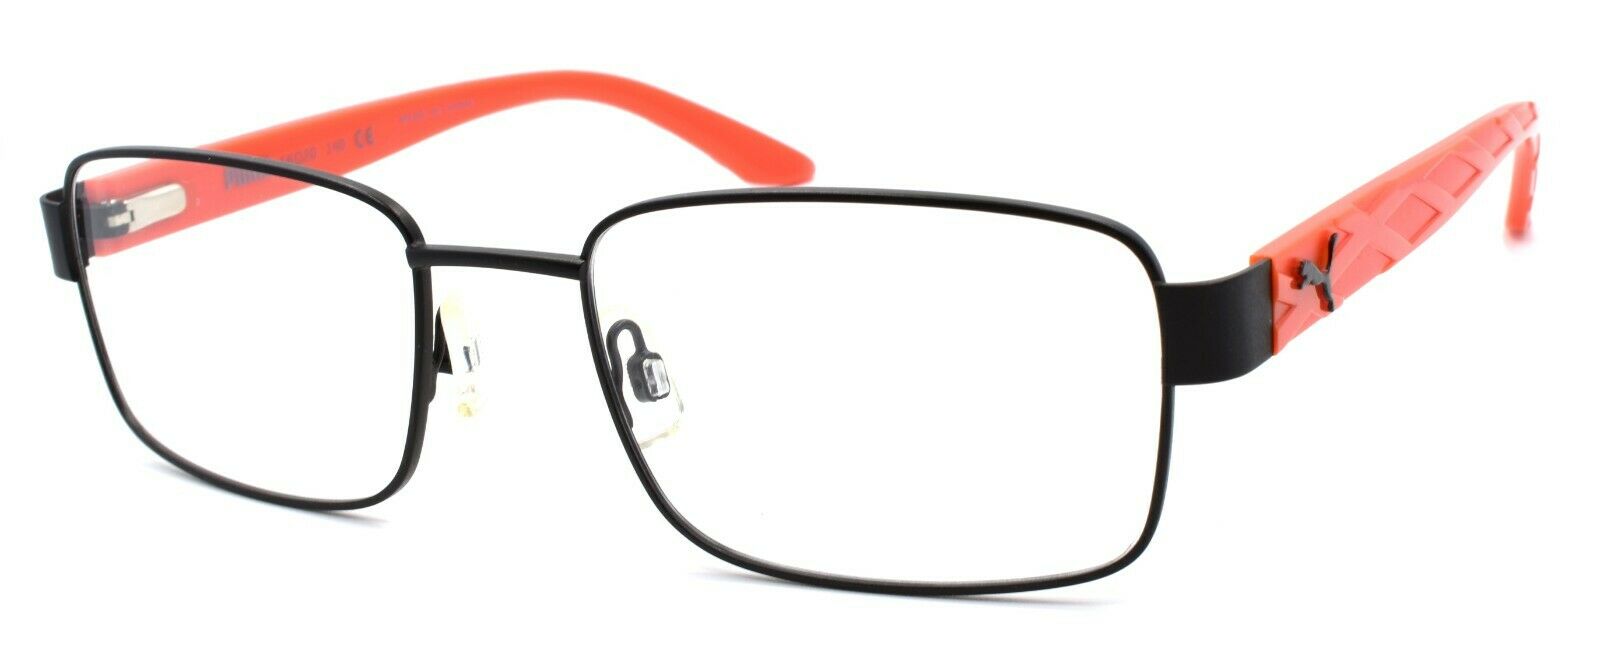 1-PUMA PU0025O 005 Men's Eyeglasses Frames 56-20-140 Black / Red-889652004006-IKSpecs